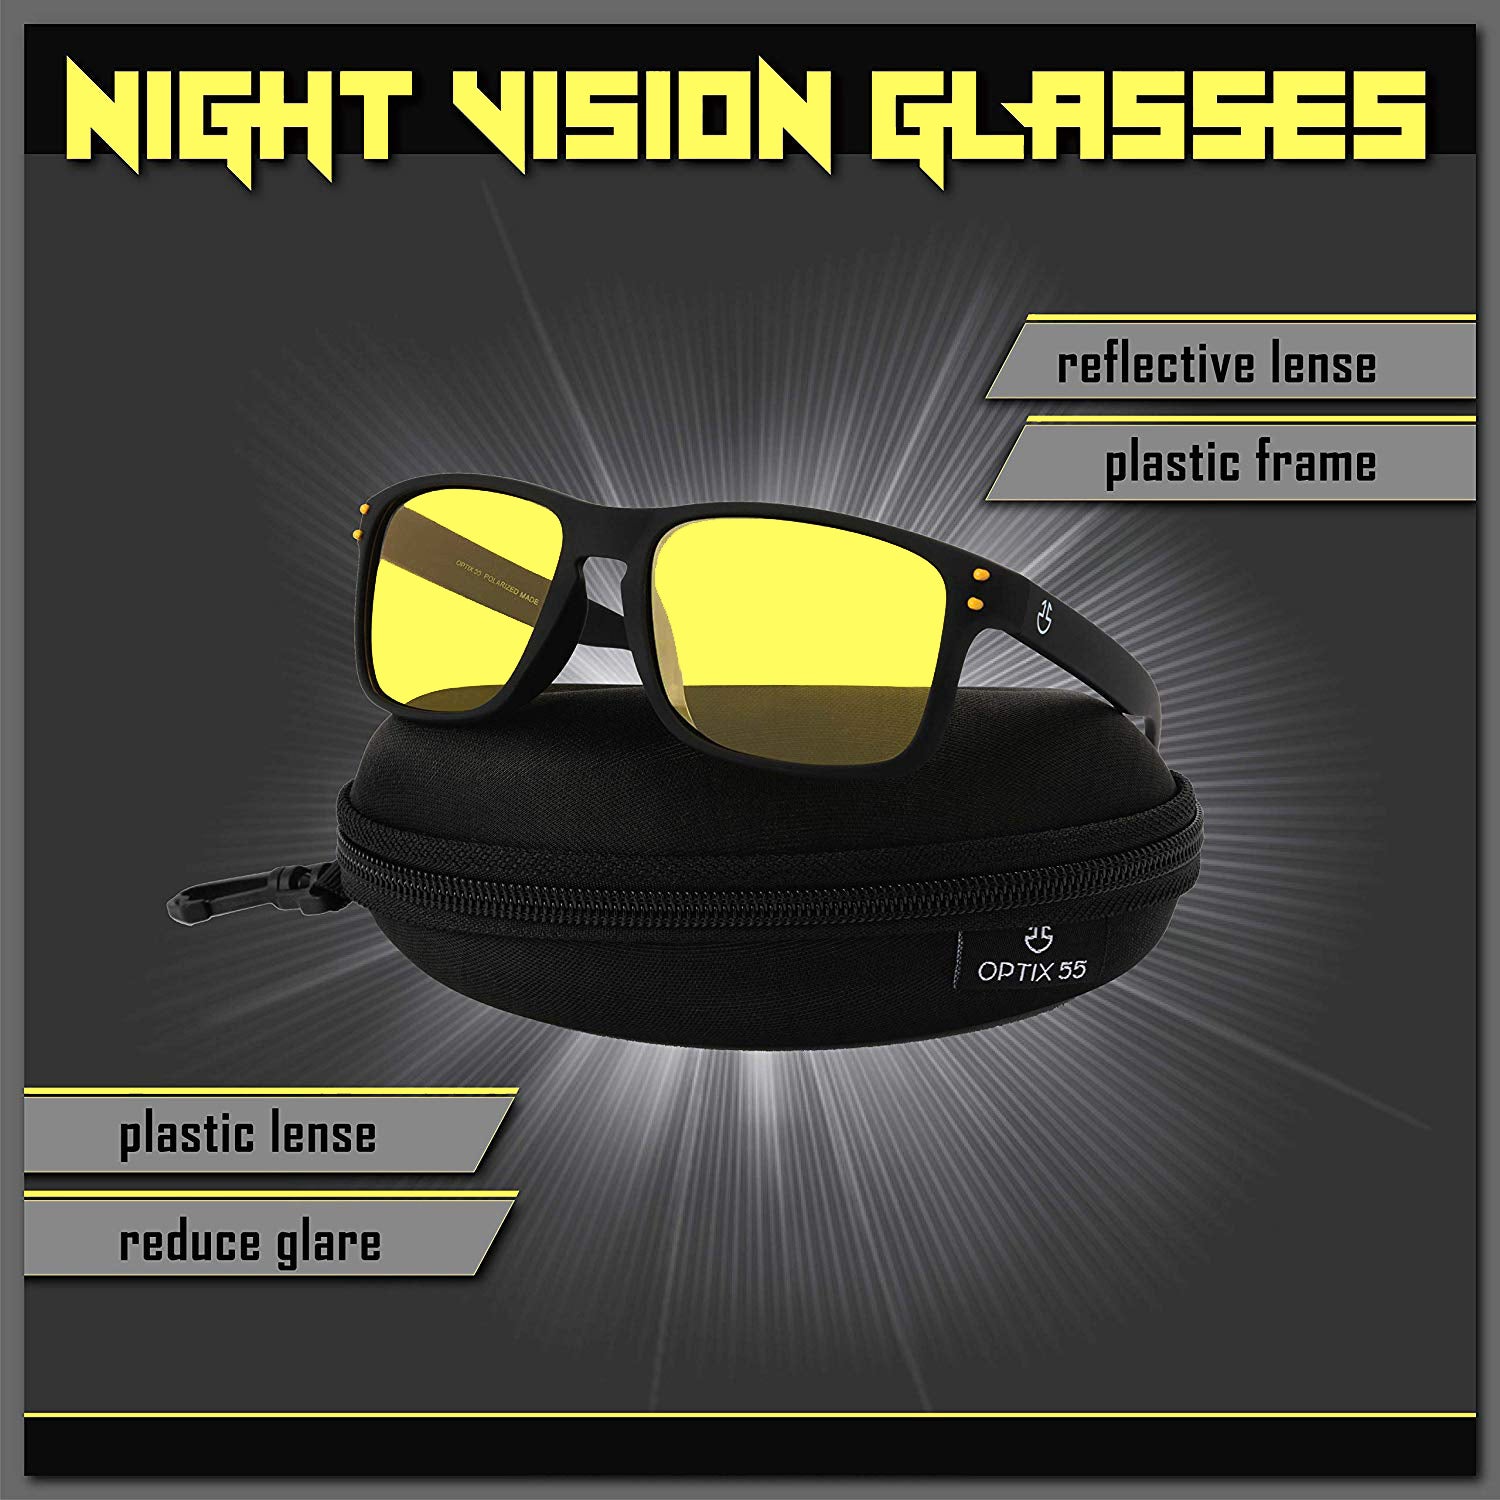 Night Sight Glasses